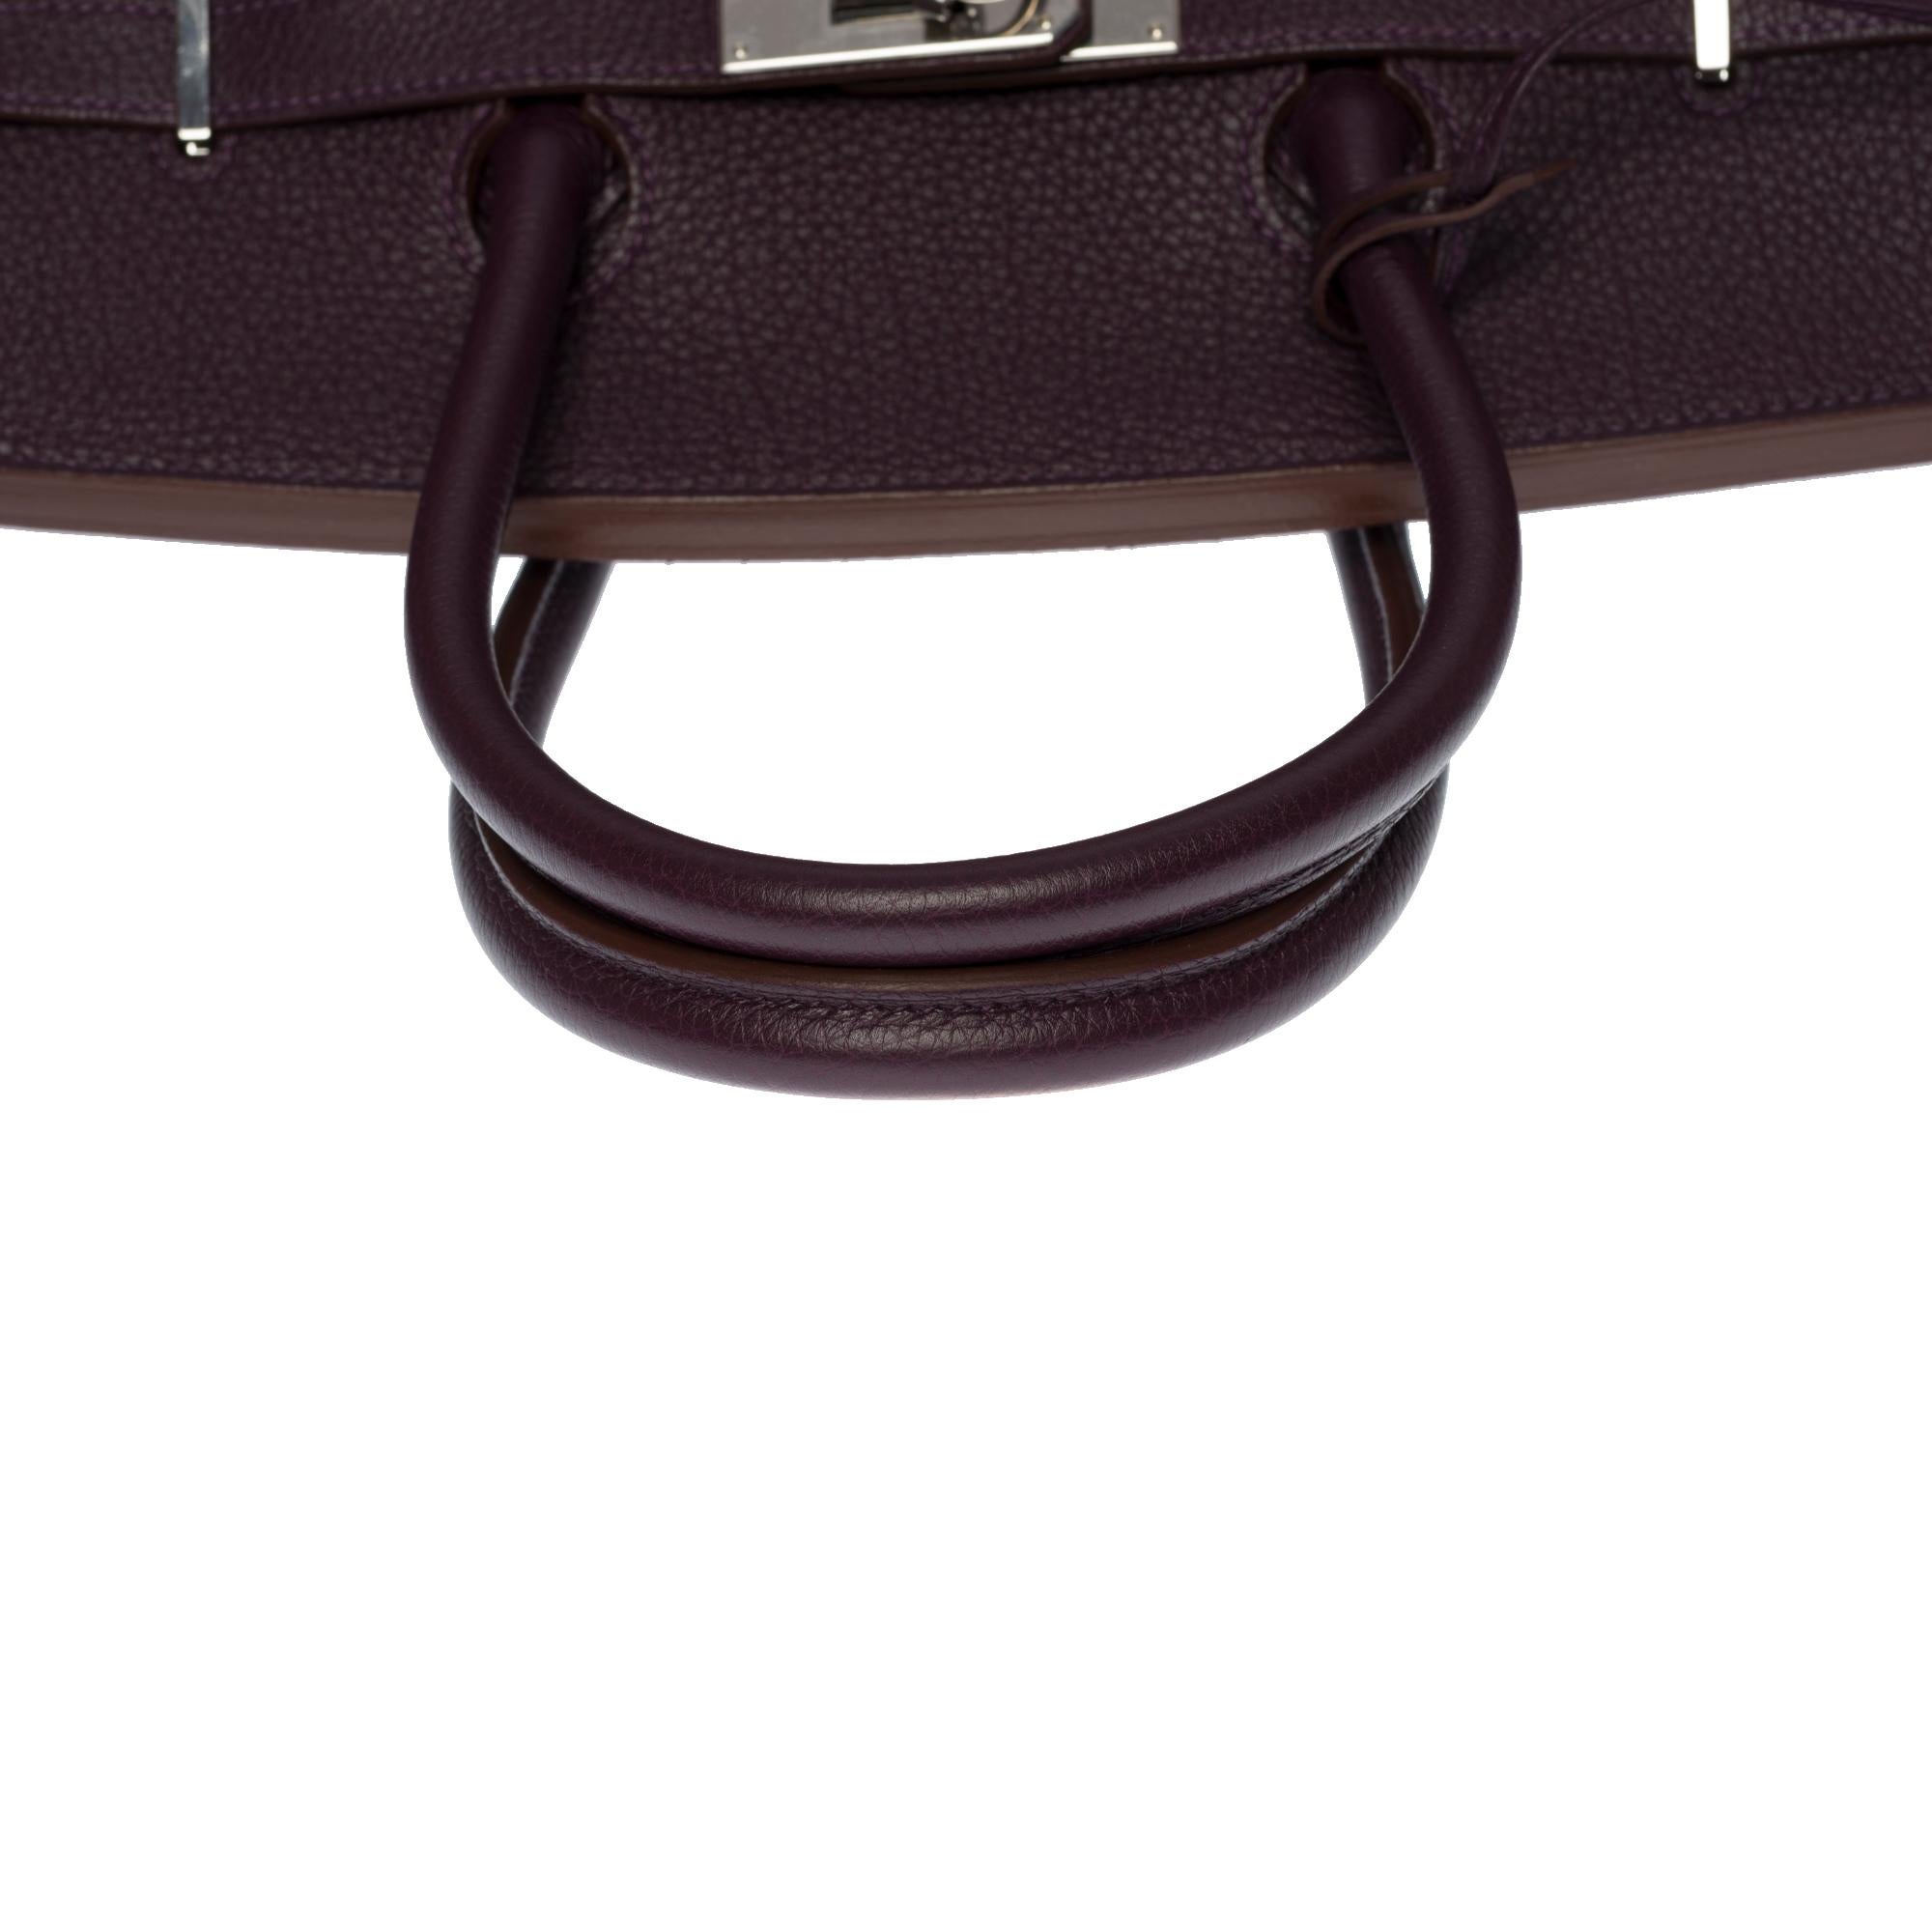 Amazing Hermès Birkin 35 handbag in raisin Togo leather, SHW 3